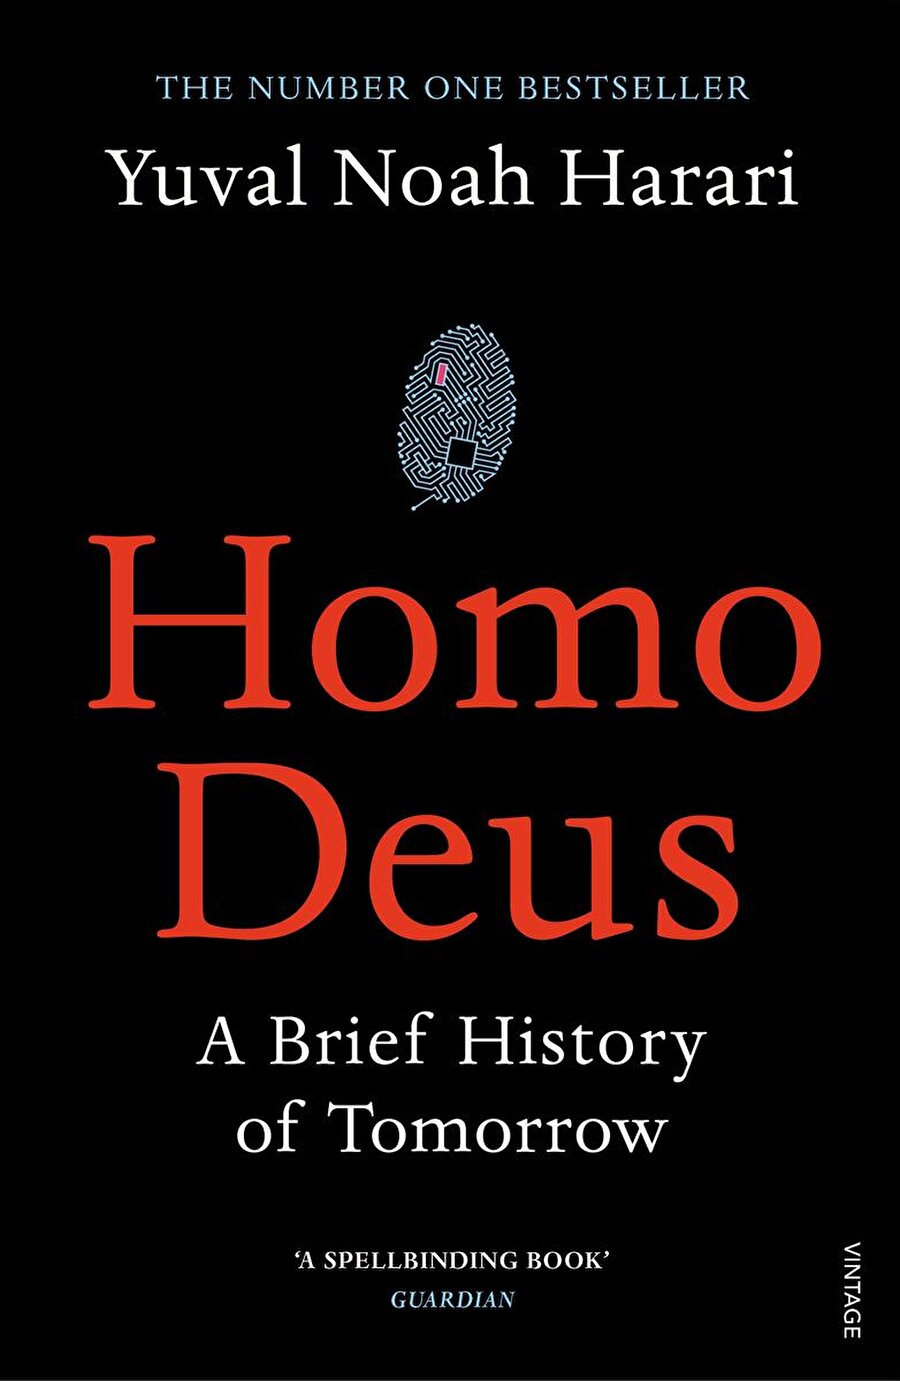 Yuval Noah Harari
"Homo Deus: A Brief History of Tomorrow"